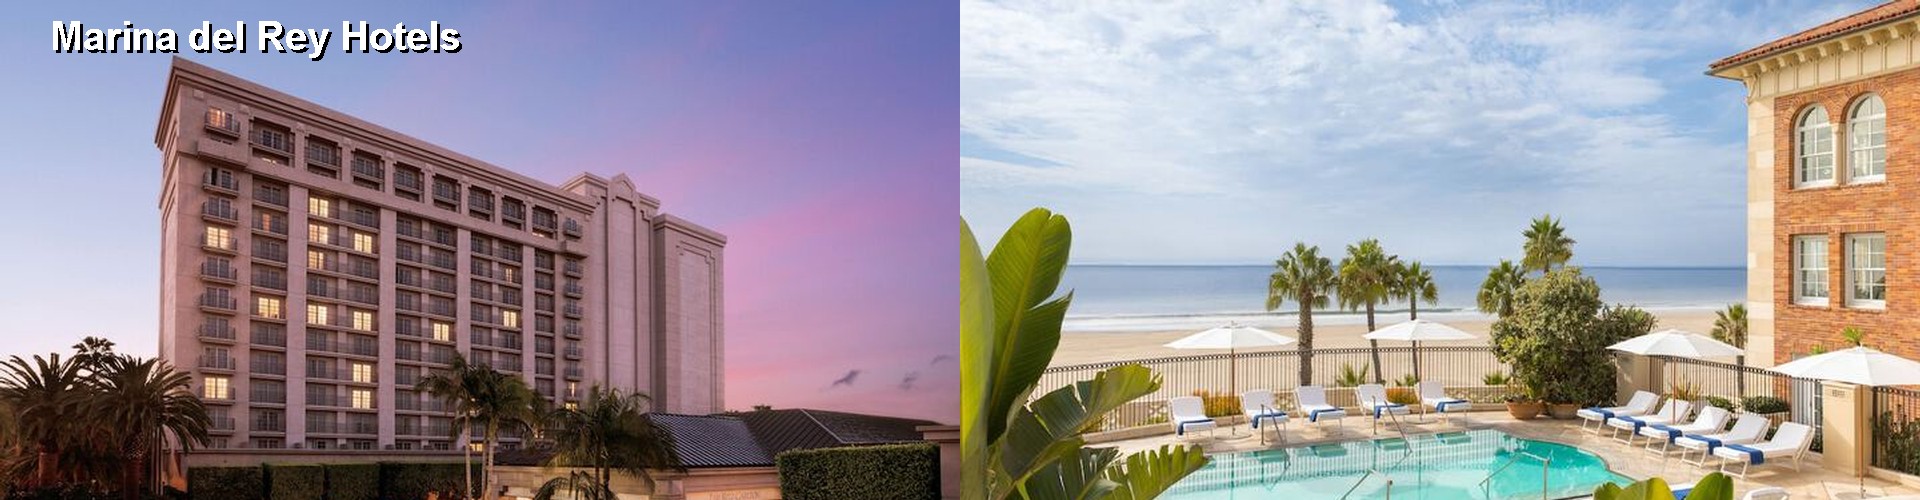 5 Best Hotels near Marina del Rey